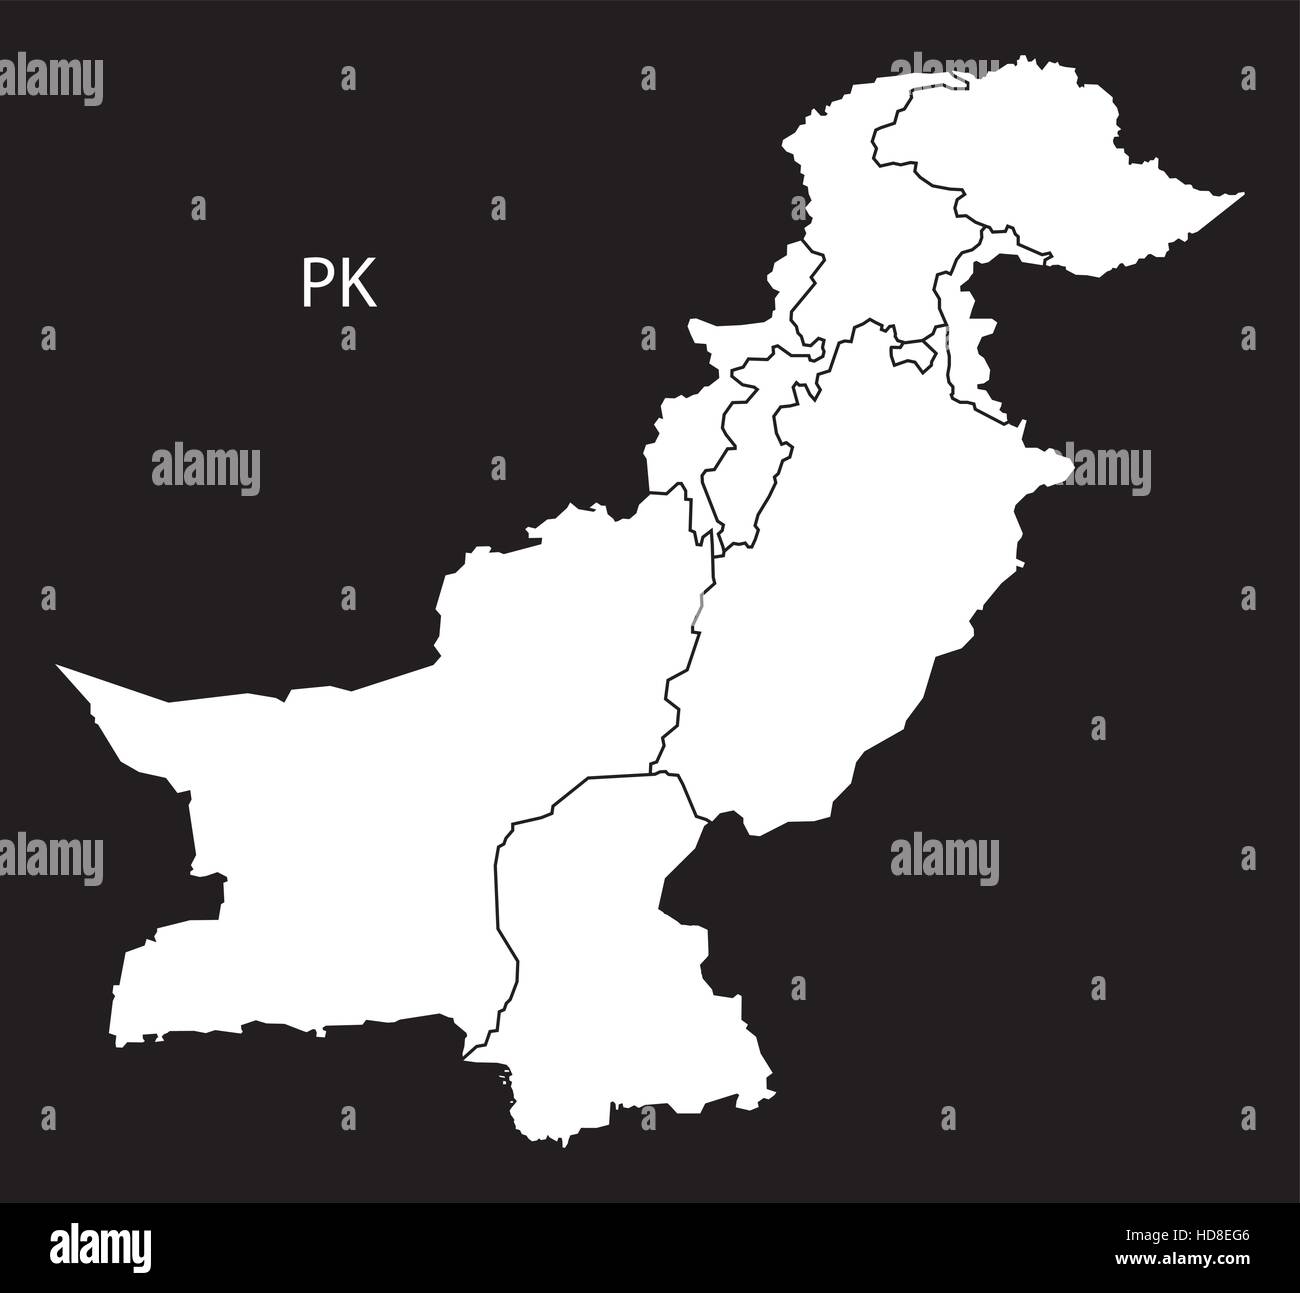 Pakistan provinces Map black and white illustration Stock Vector